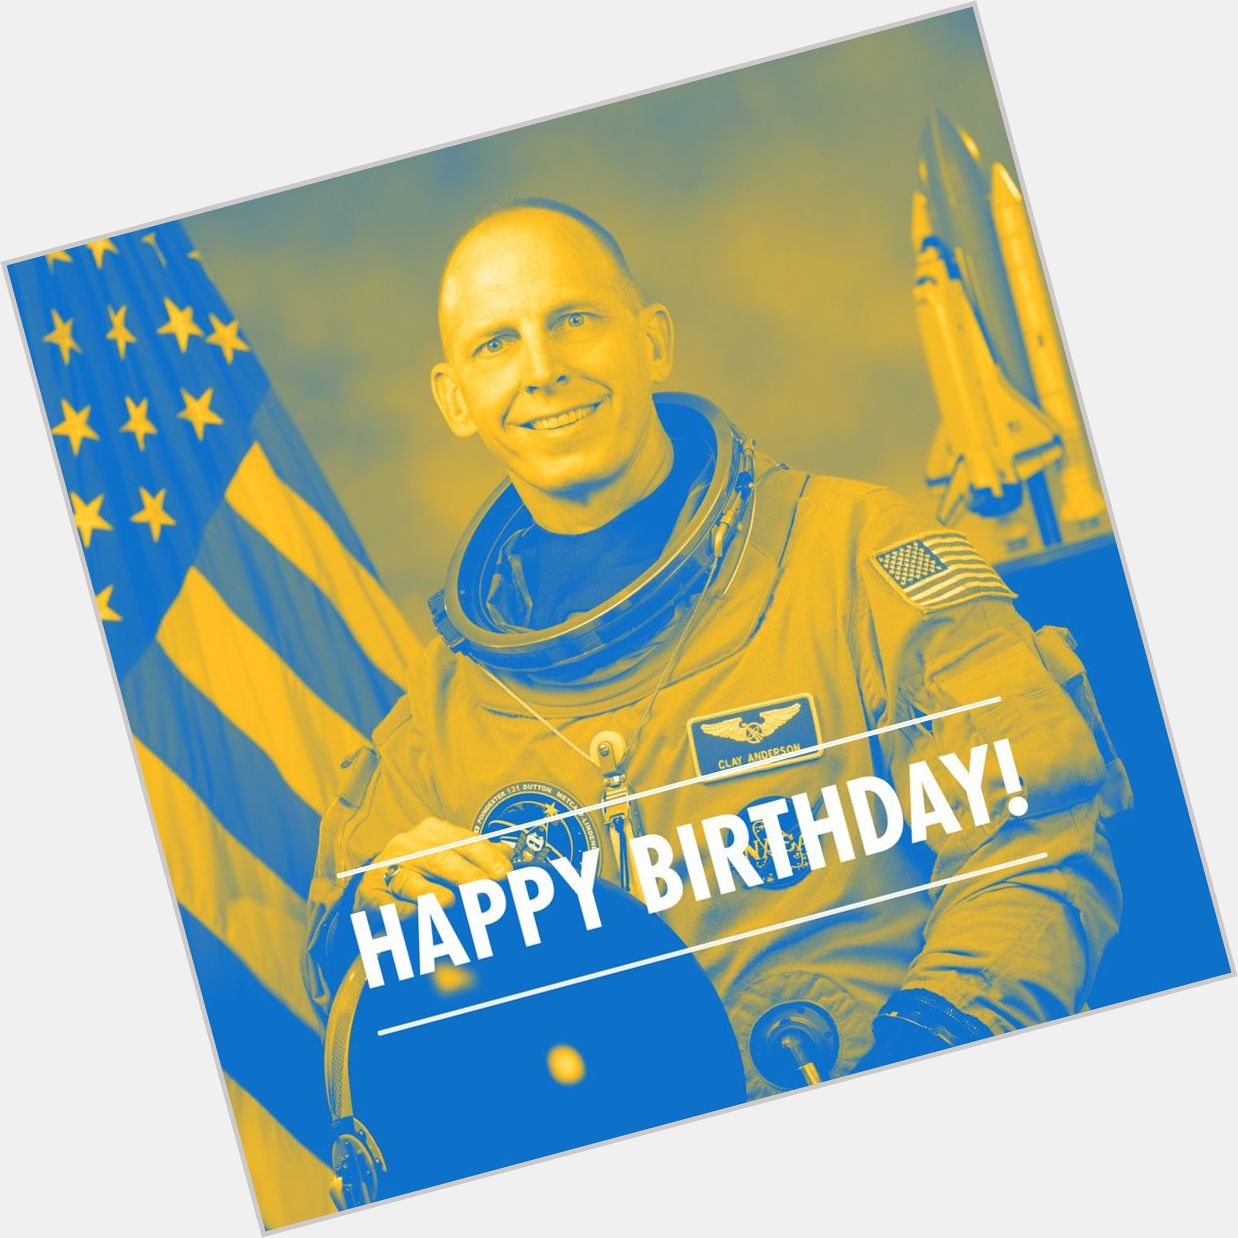 Happy birthday to our very own Nebraska astronaut, Clayton Anderson! 